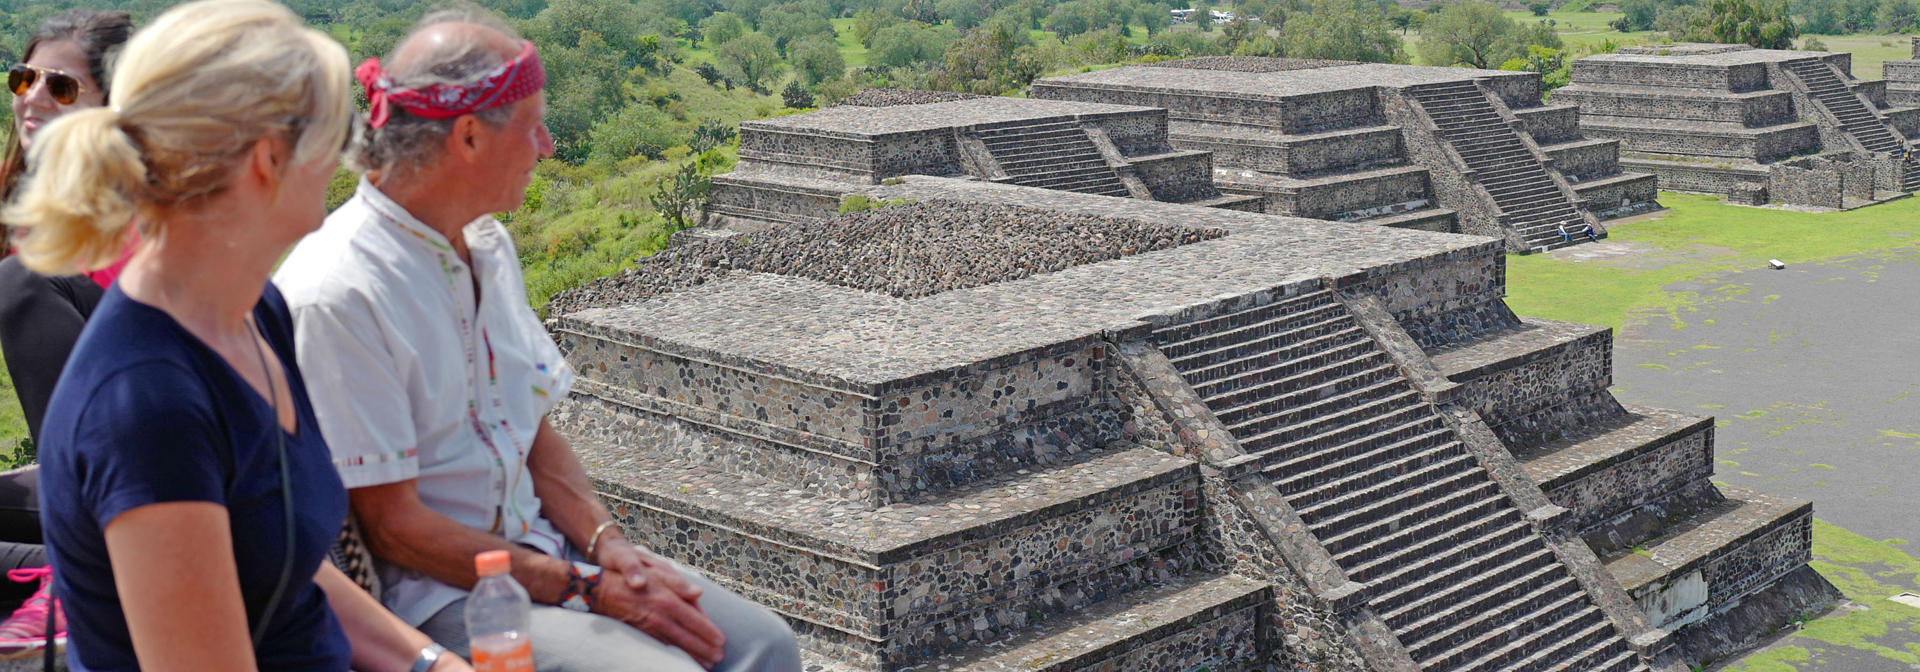 mexico - teotihuacan pyramids_15